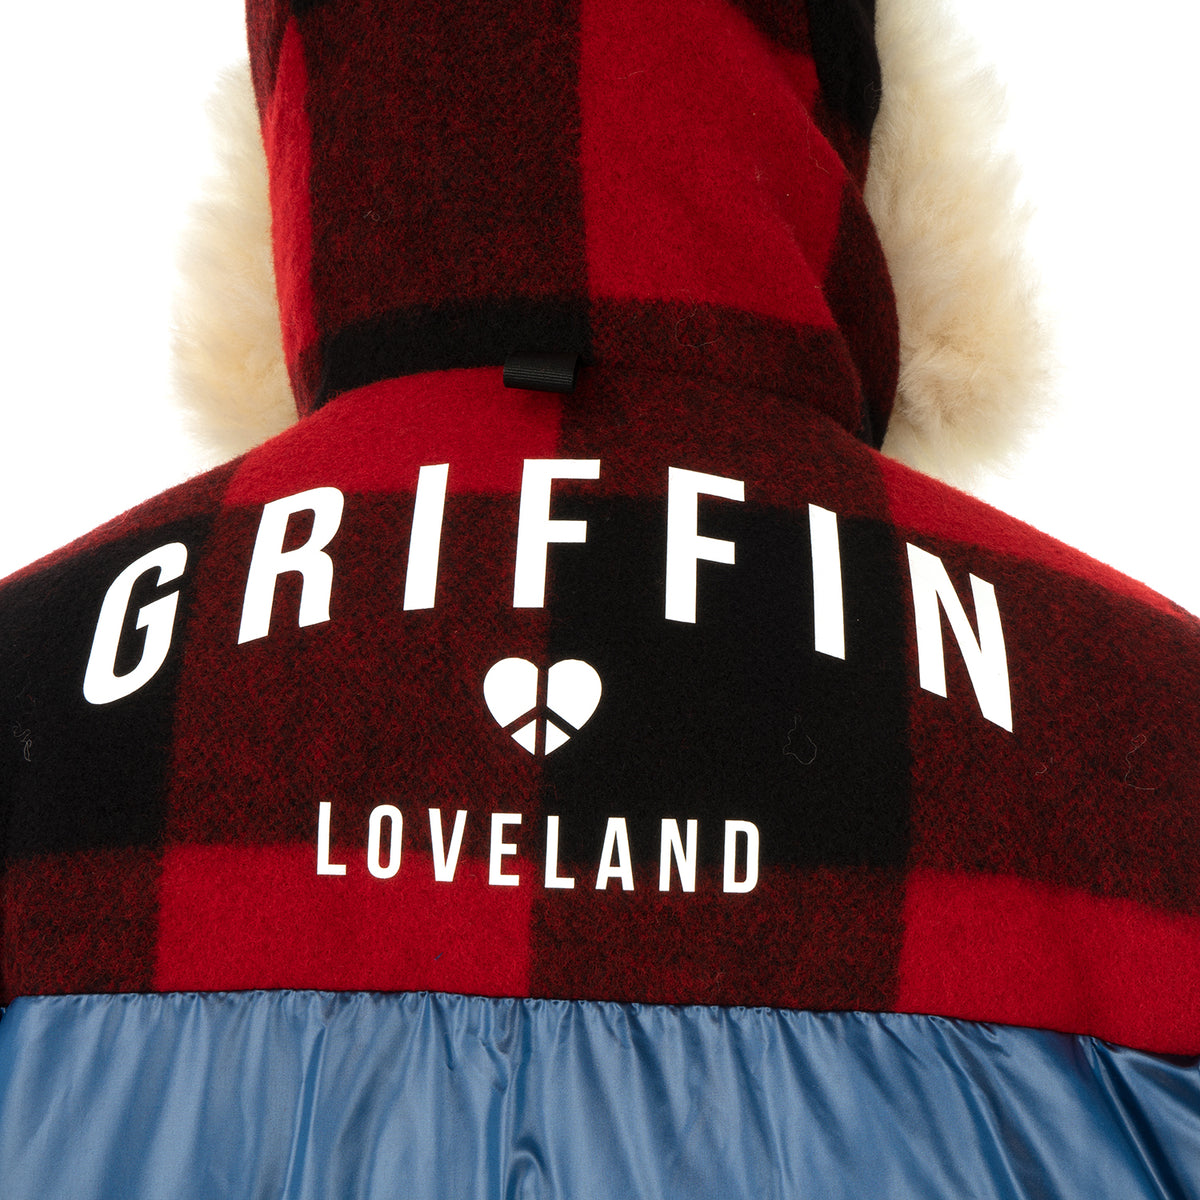 Griffin | Reversible Sleeping Bag Coat Snow Camo / Black - Concrete